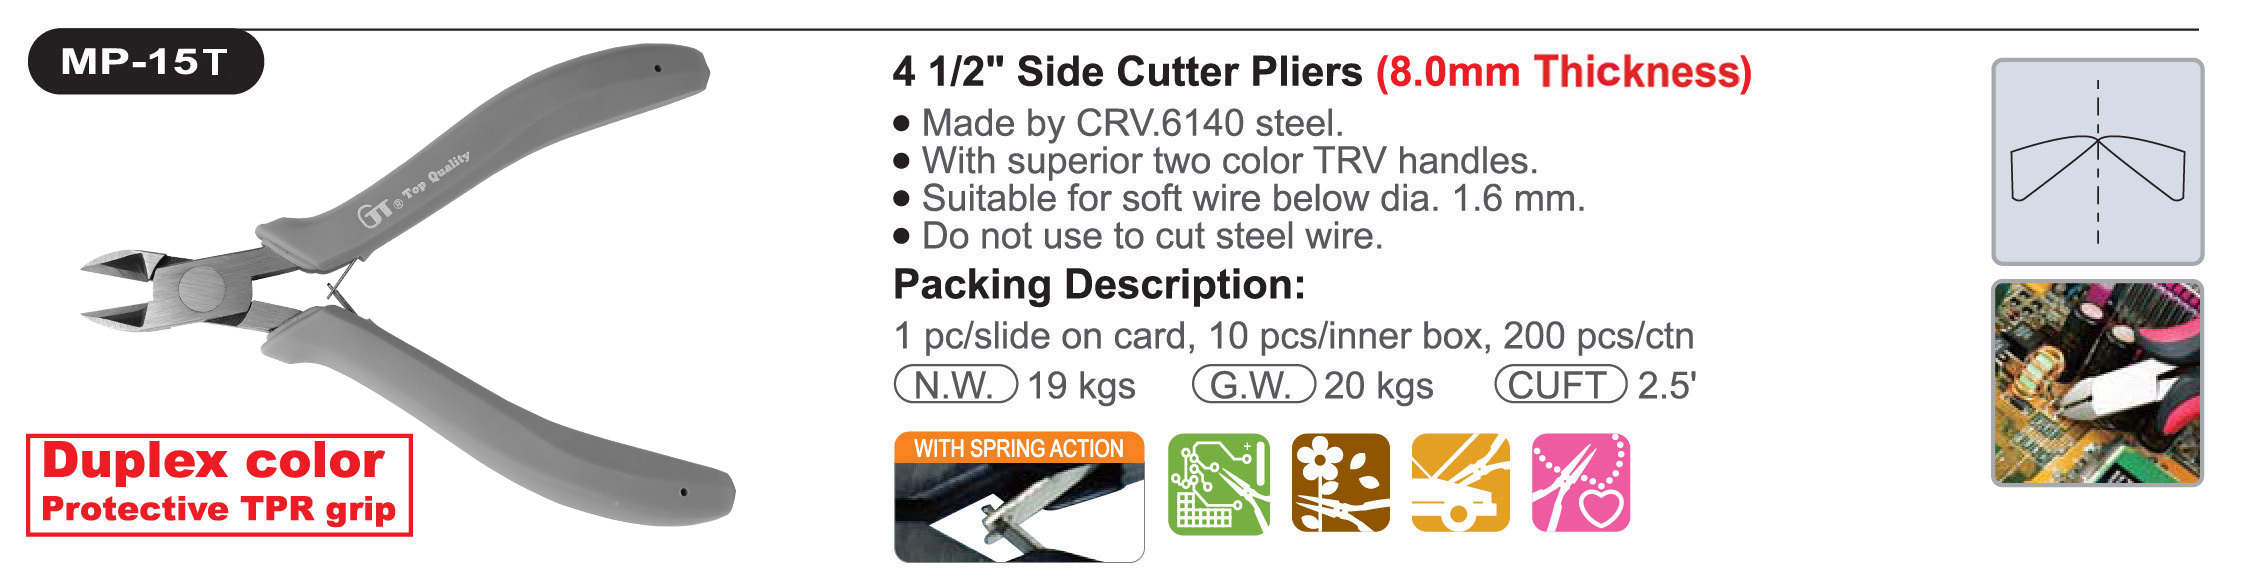 proimages/product/pliers/cutting_pliers/Diagonal_Cutters/MP-15T/MP-15T.jpg